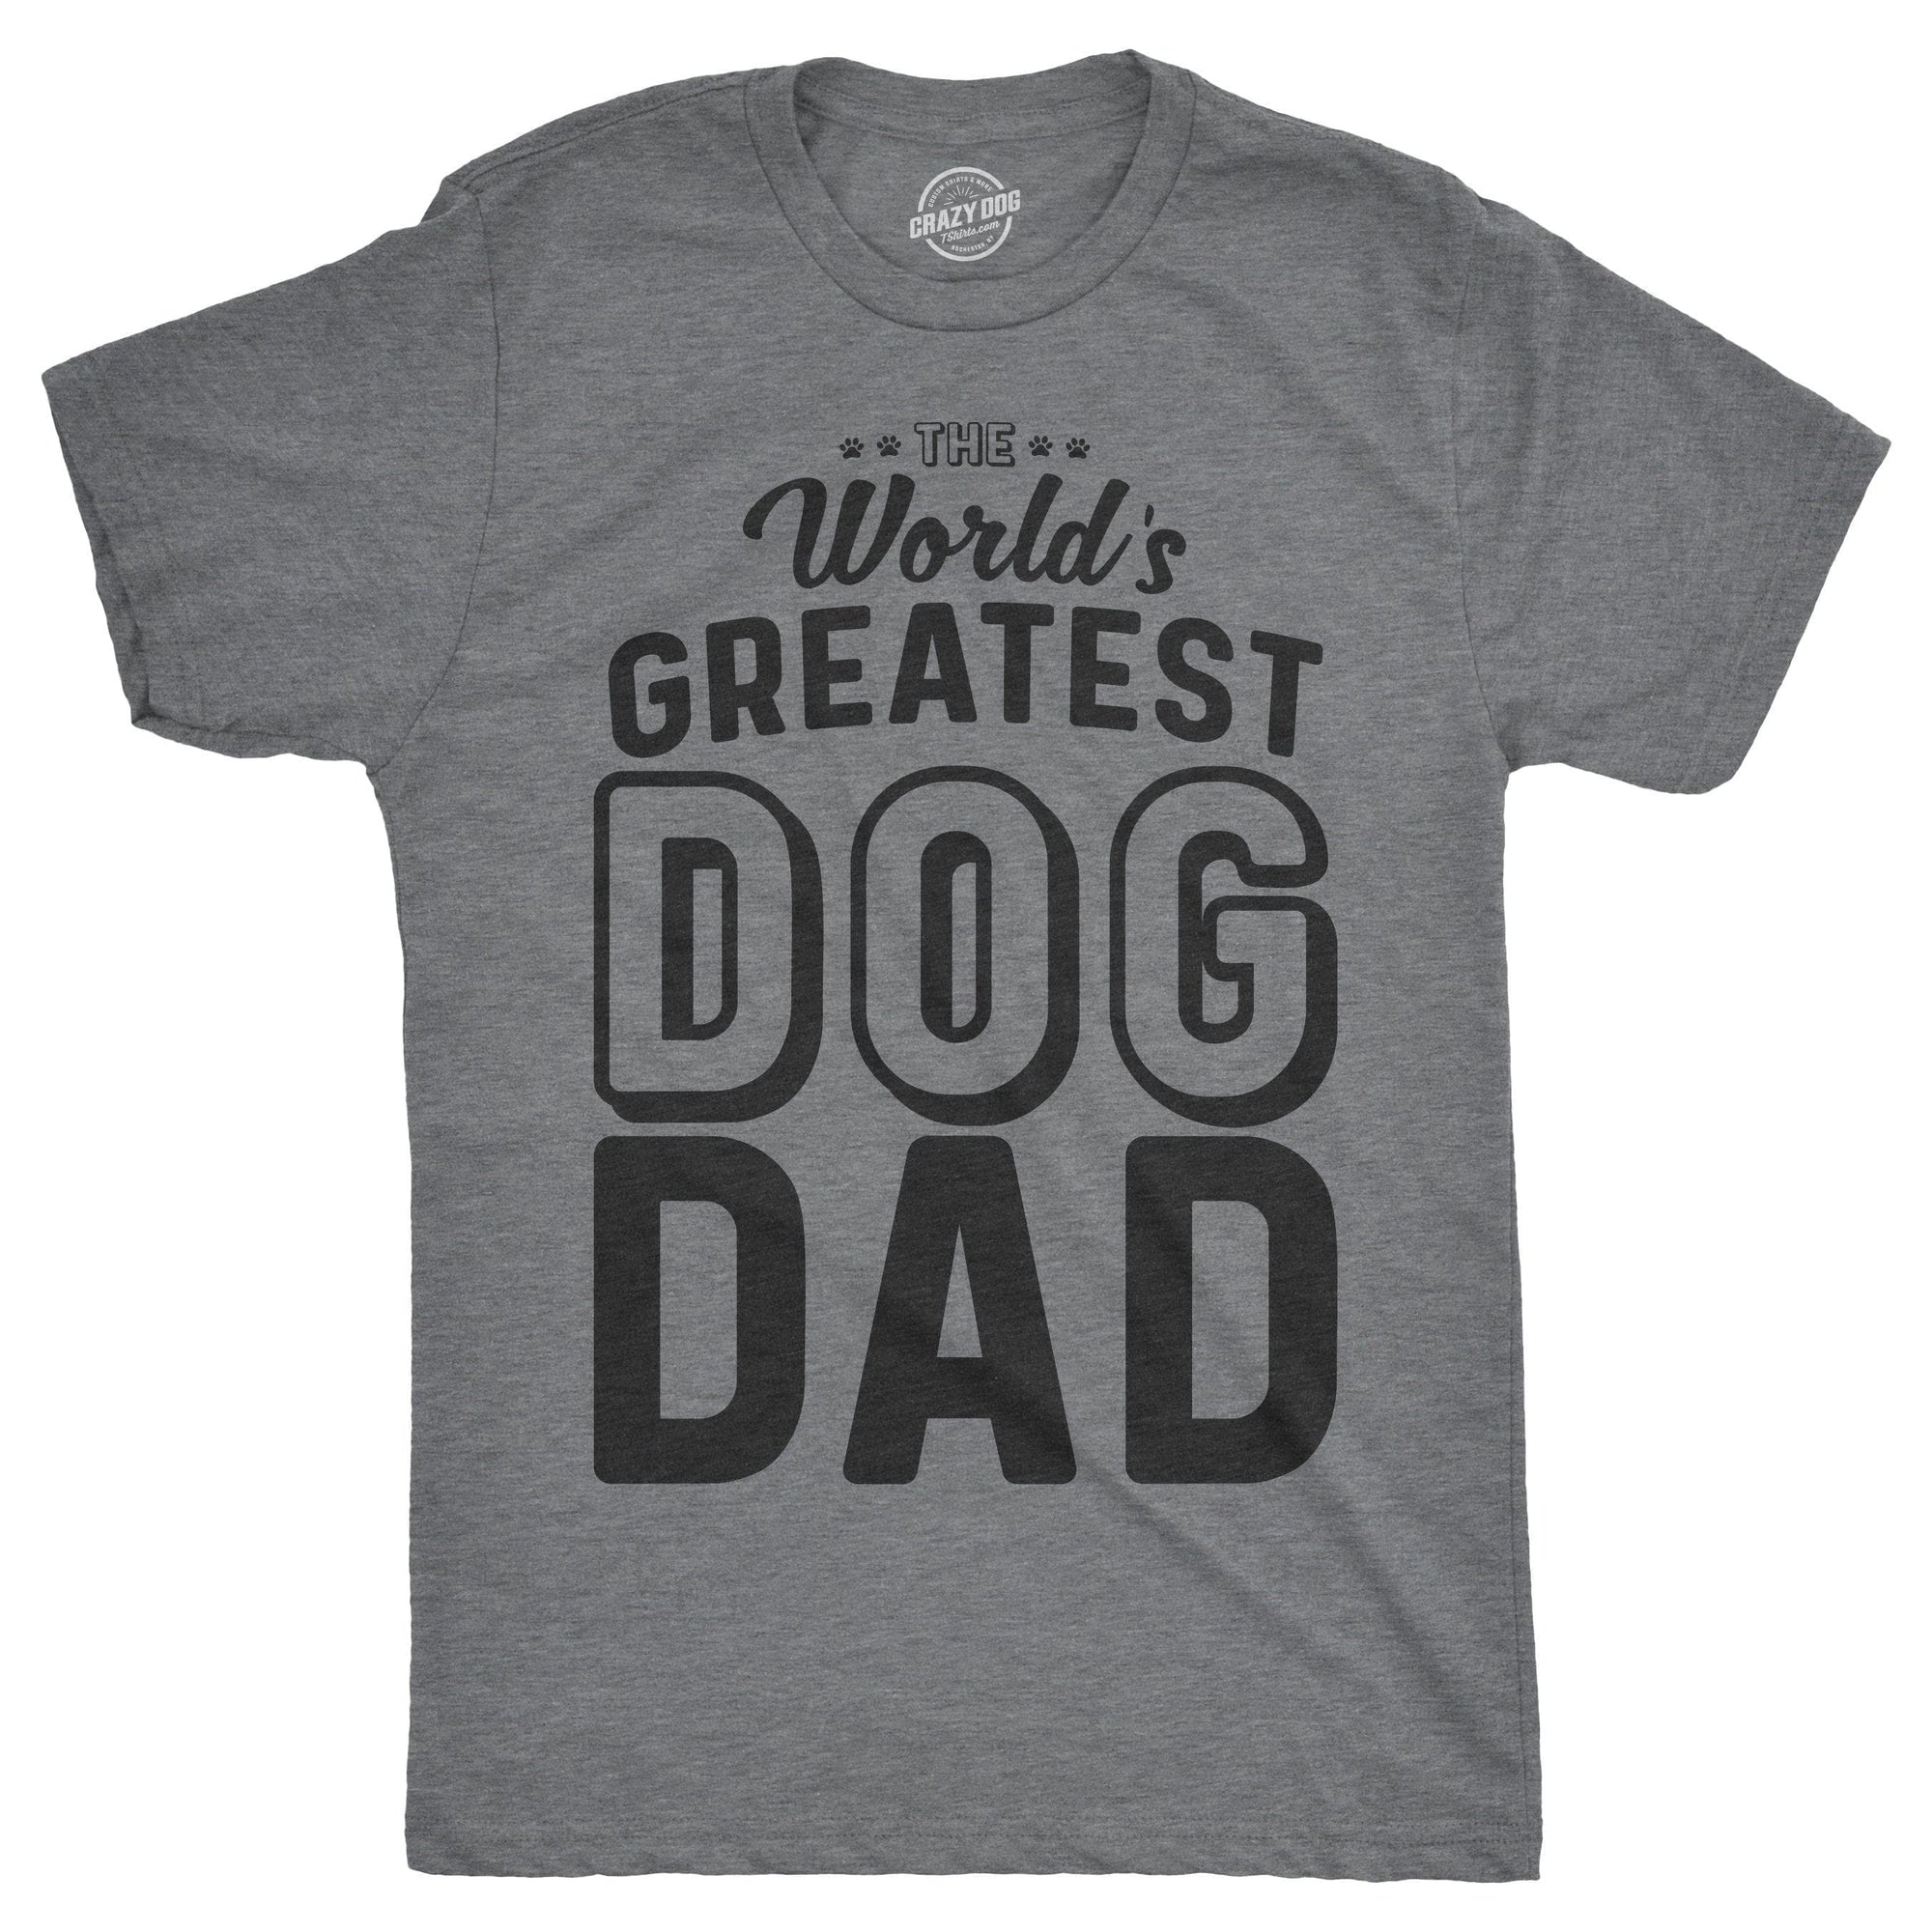 World's Greatest Dog Dad Men's Tshirt - Crazy Dog T-Shirts